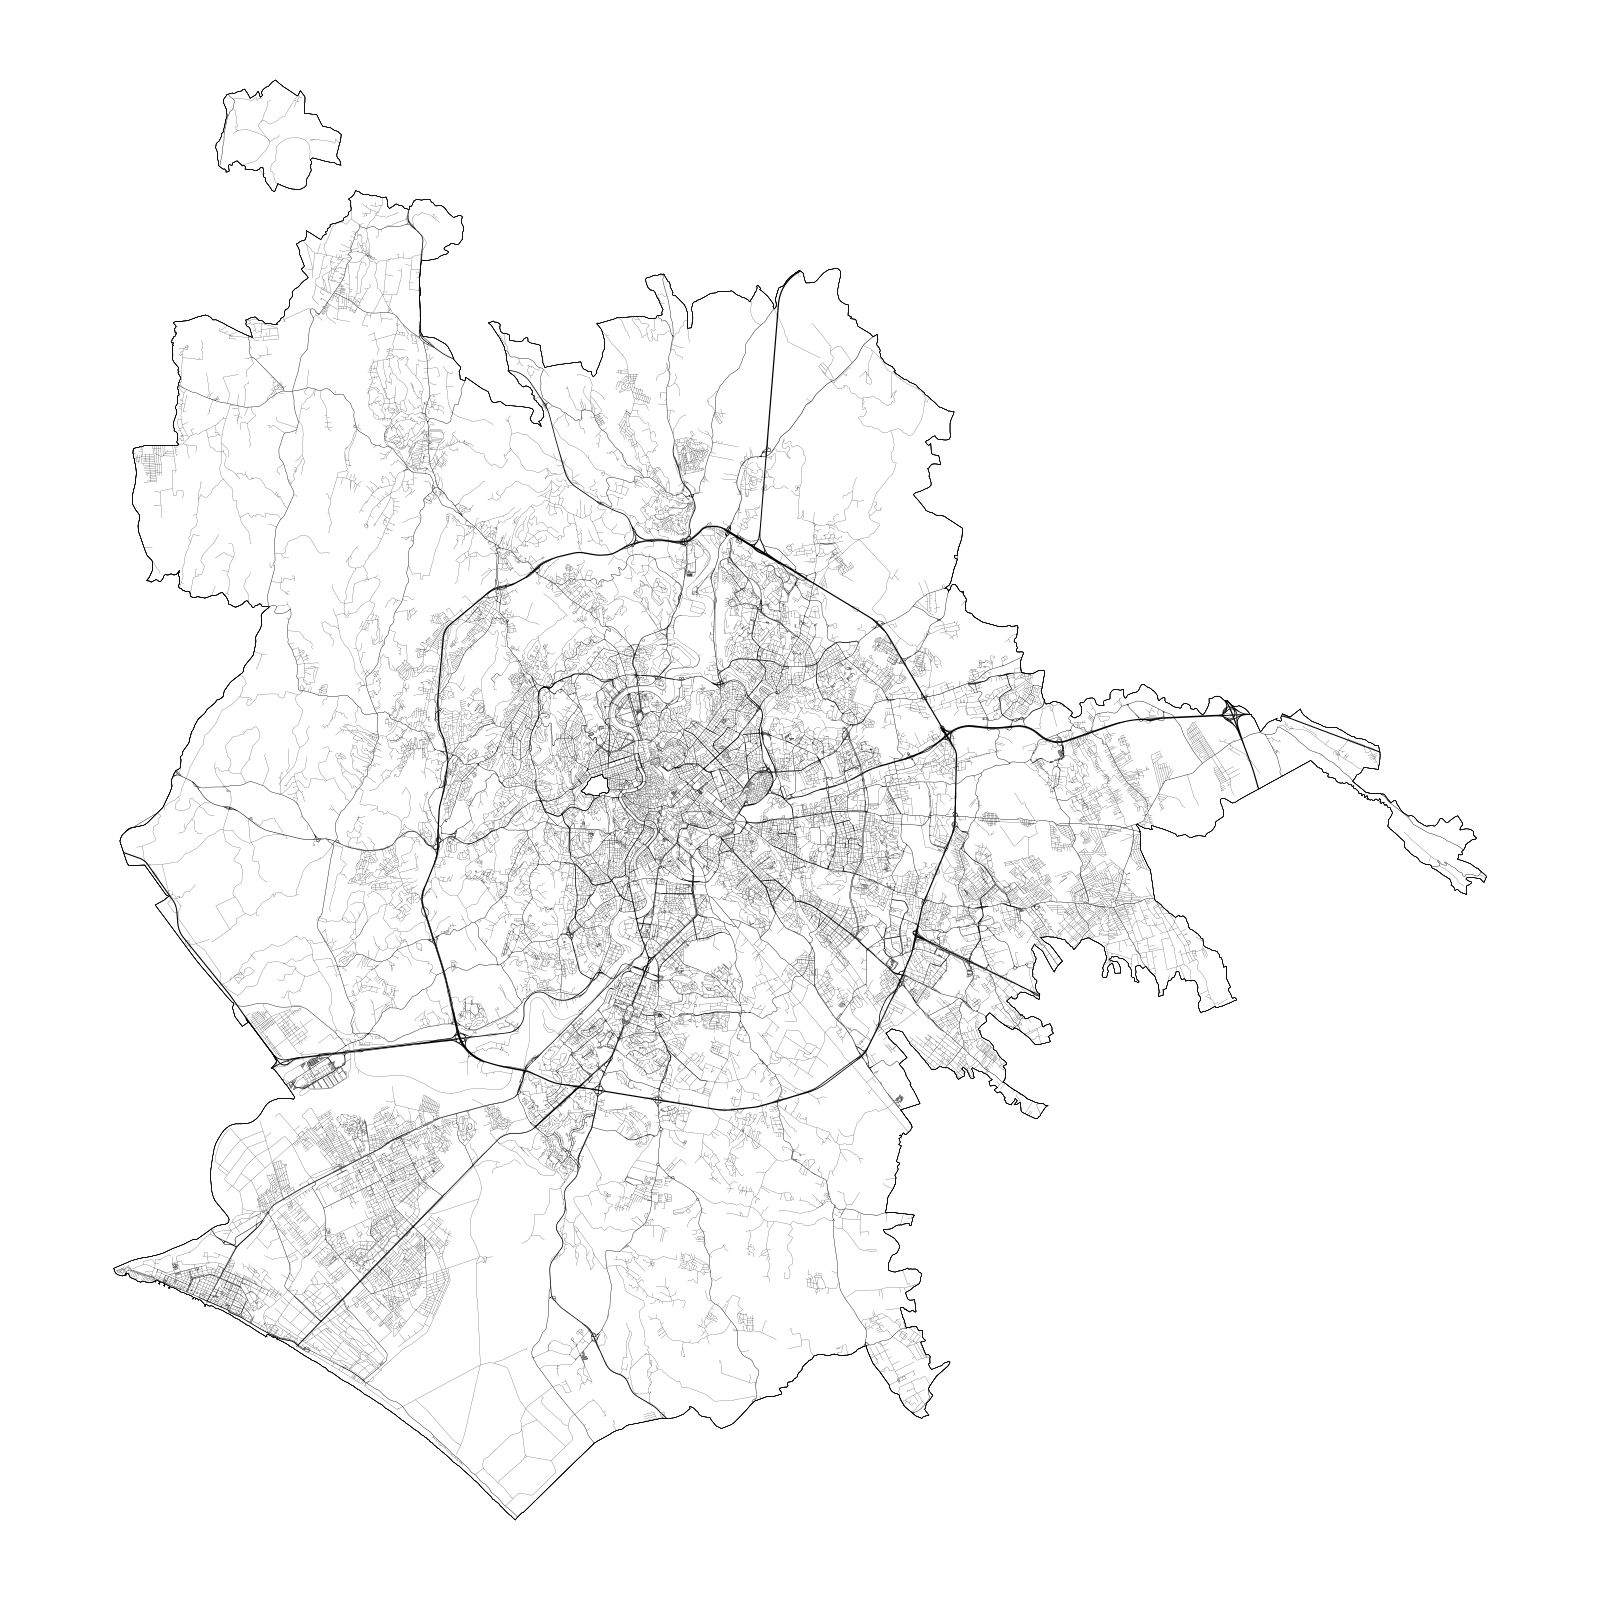 city-map